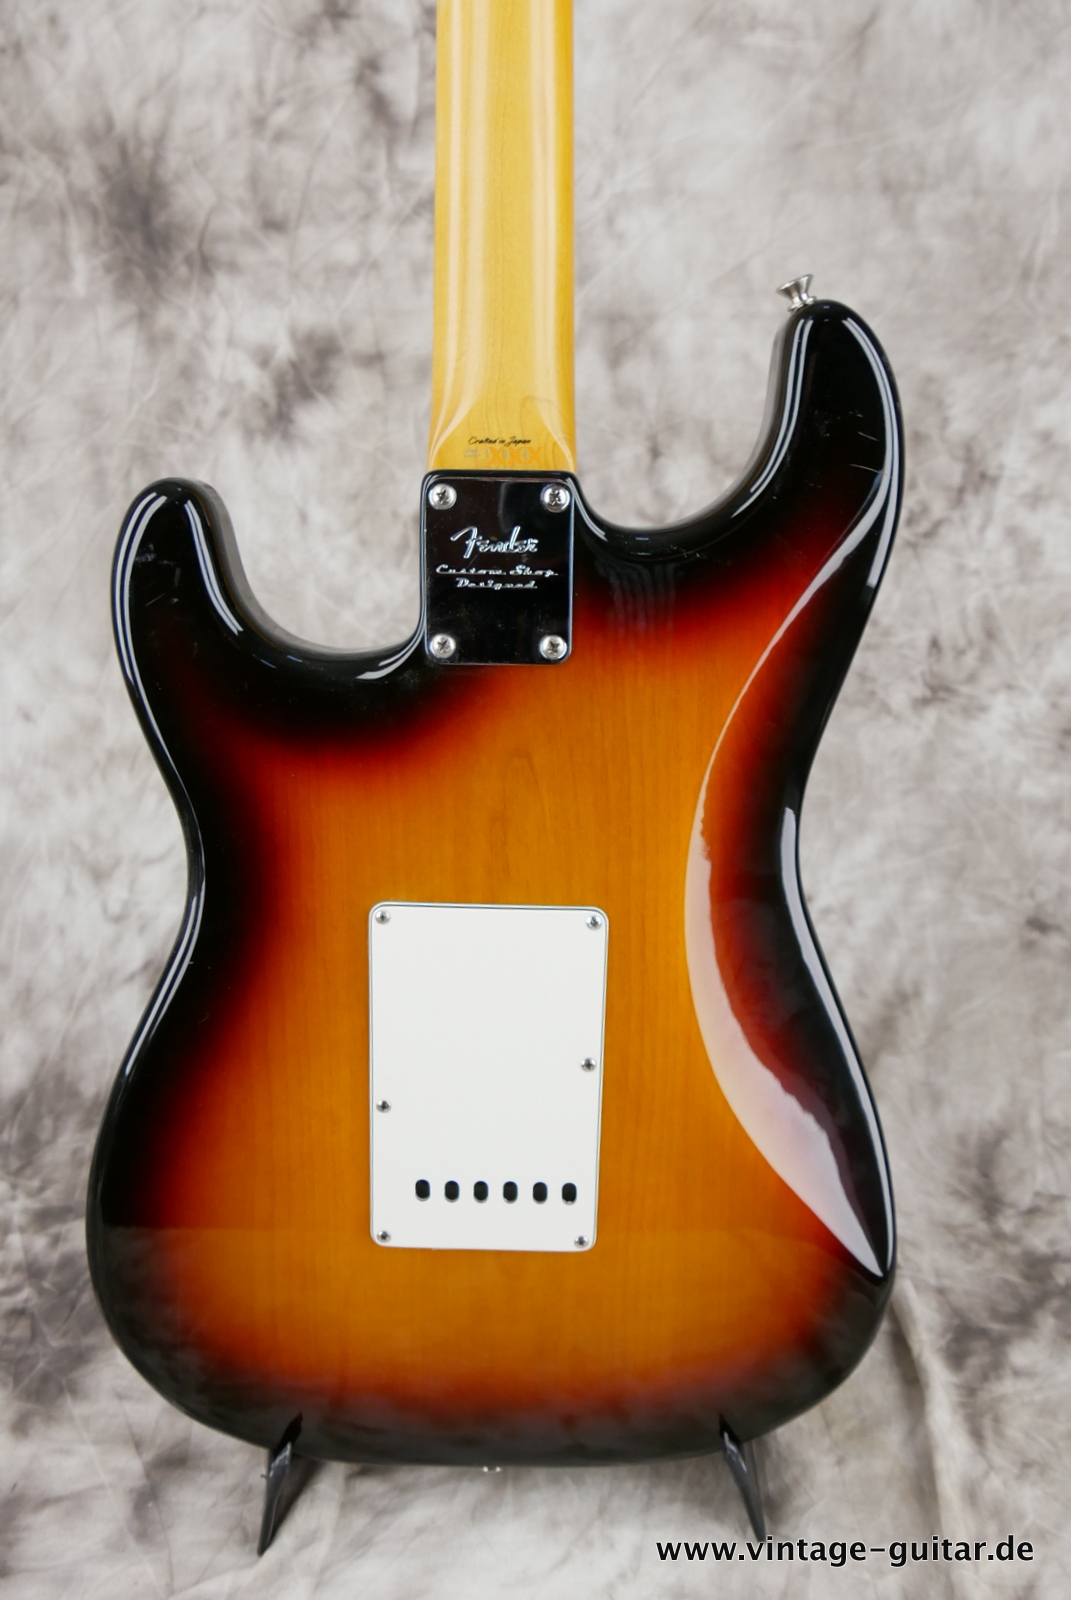 Fender_Stratocaster_crafted_in_Japan_sunburst_two_piont_tromolo_3,76kg-004.JPG